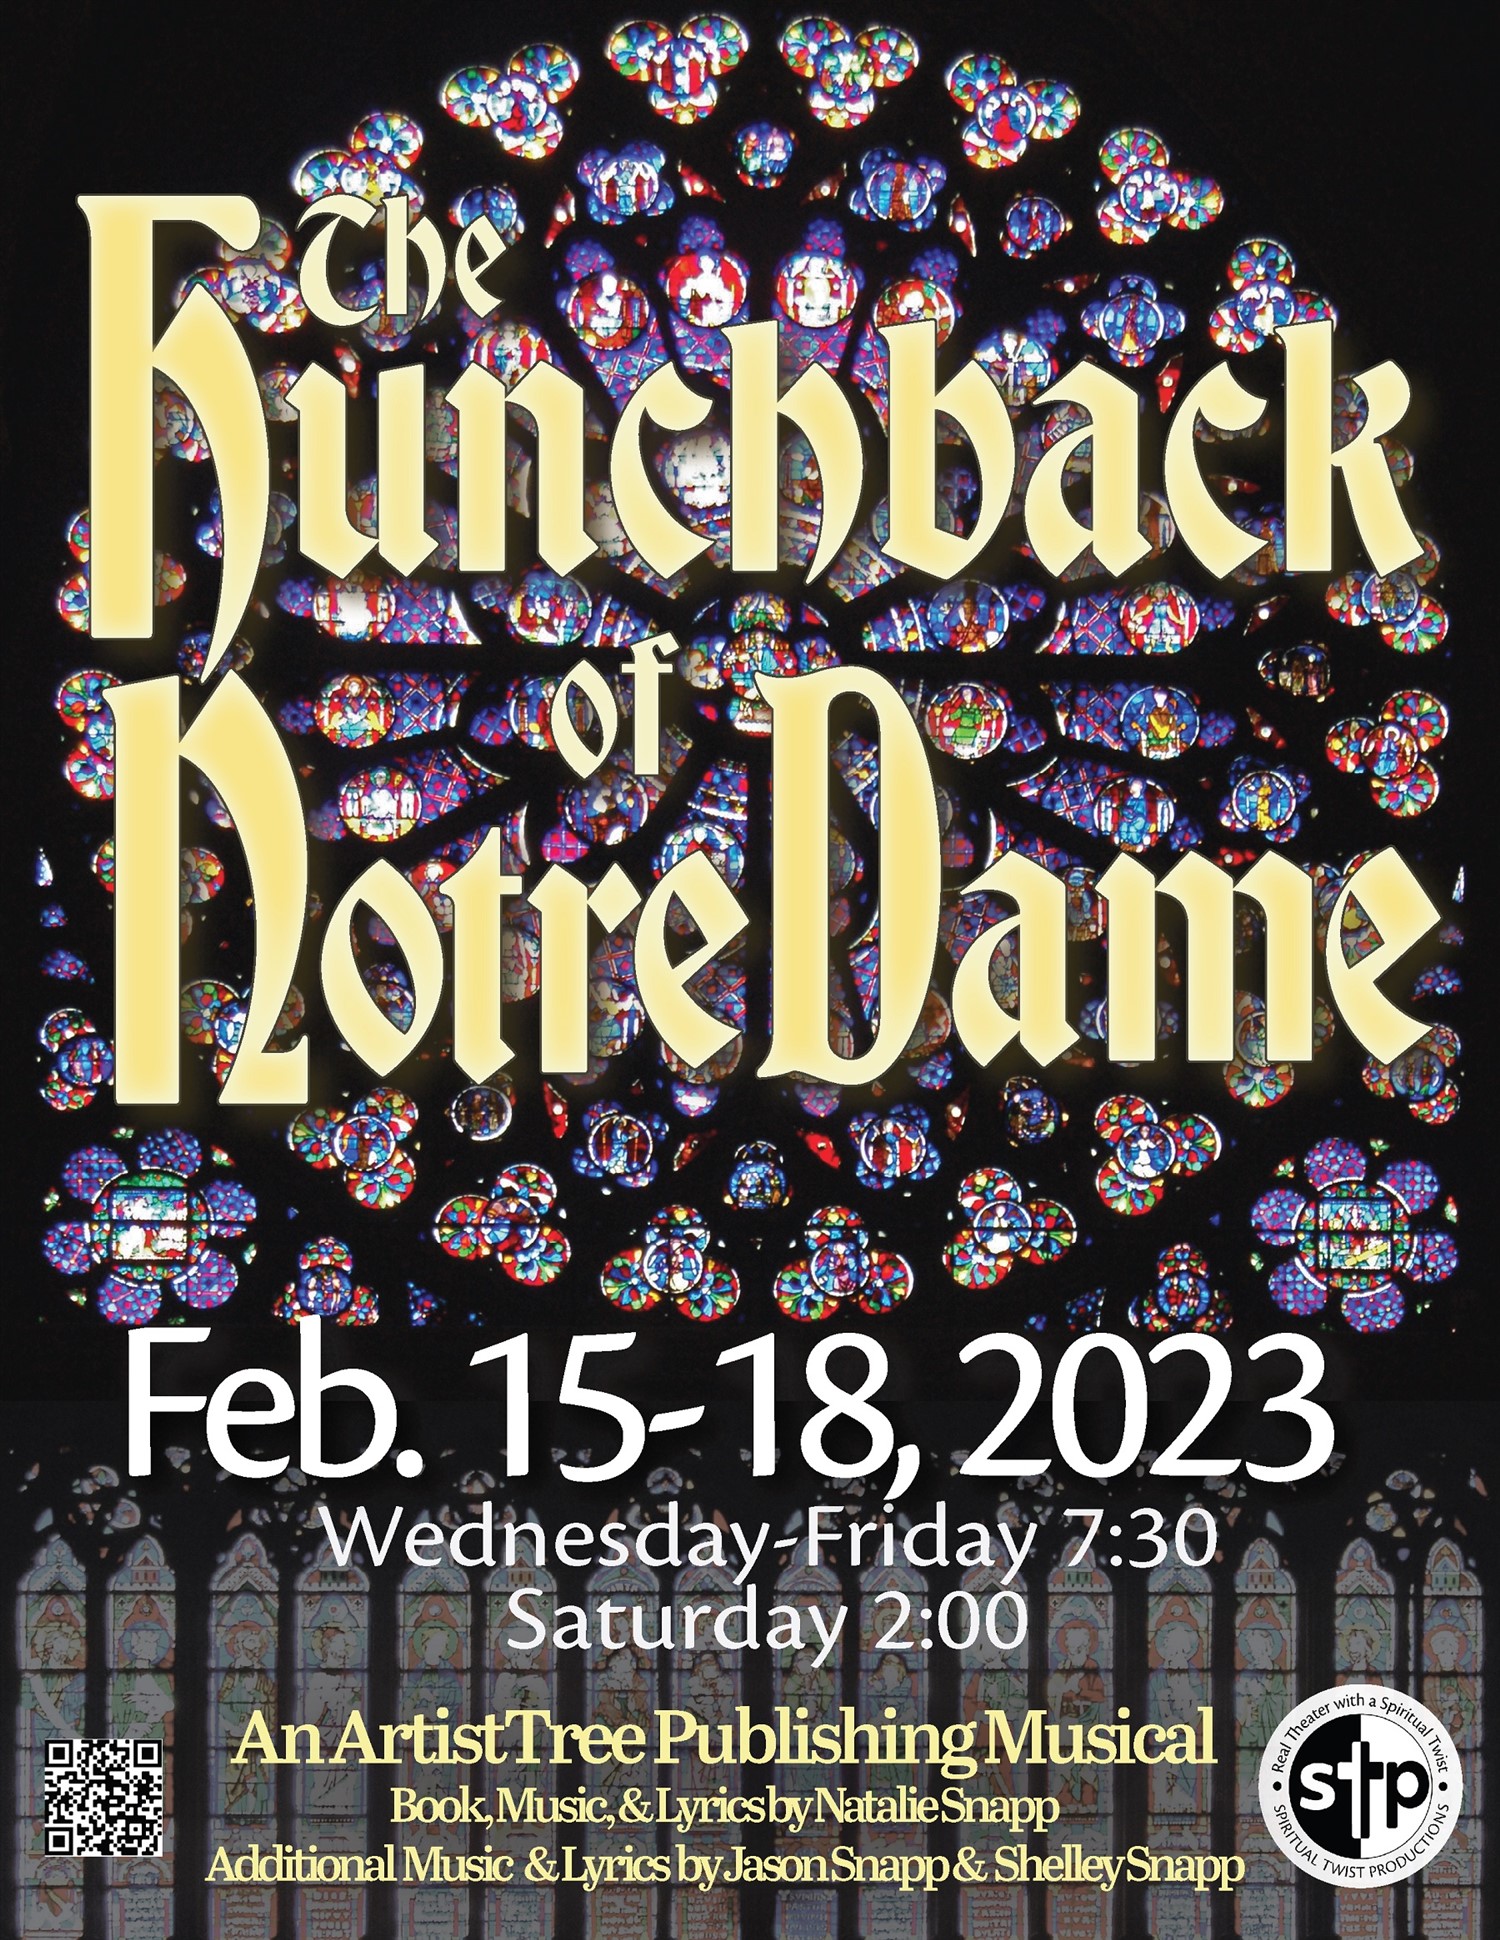 The Hunchback of Notre Dame Thursday, February 16, 2023 @ 7:30 PM on feb. 16, 19:30@Spiritual Twist Productions - Elegir asientoCompra entradas y obtén información enSpiritual Twist Productions tickets.spiritualtwist.com